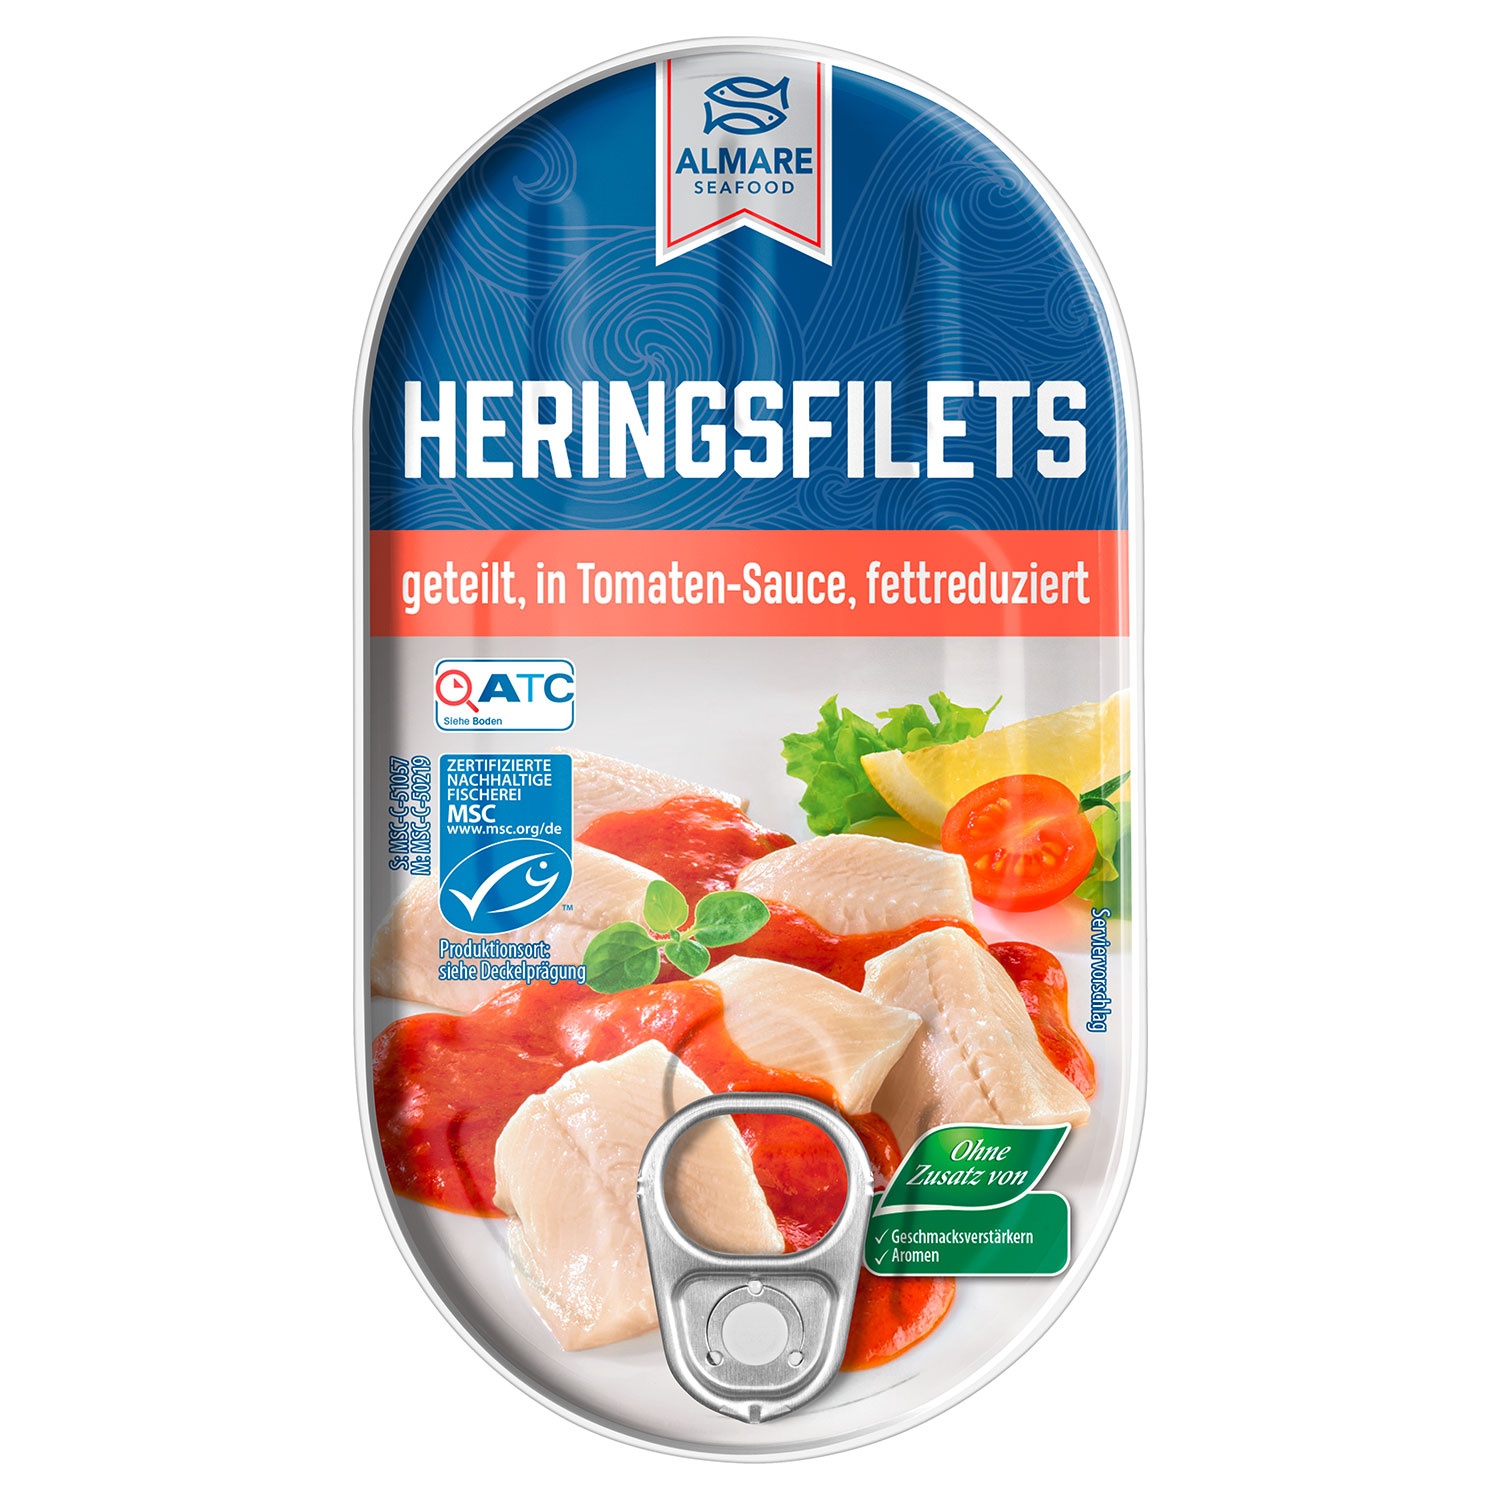 ALMARE SEAFOOD Heringsfilet in Tomatensauce 200 g, Low Fat